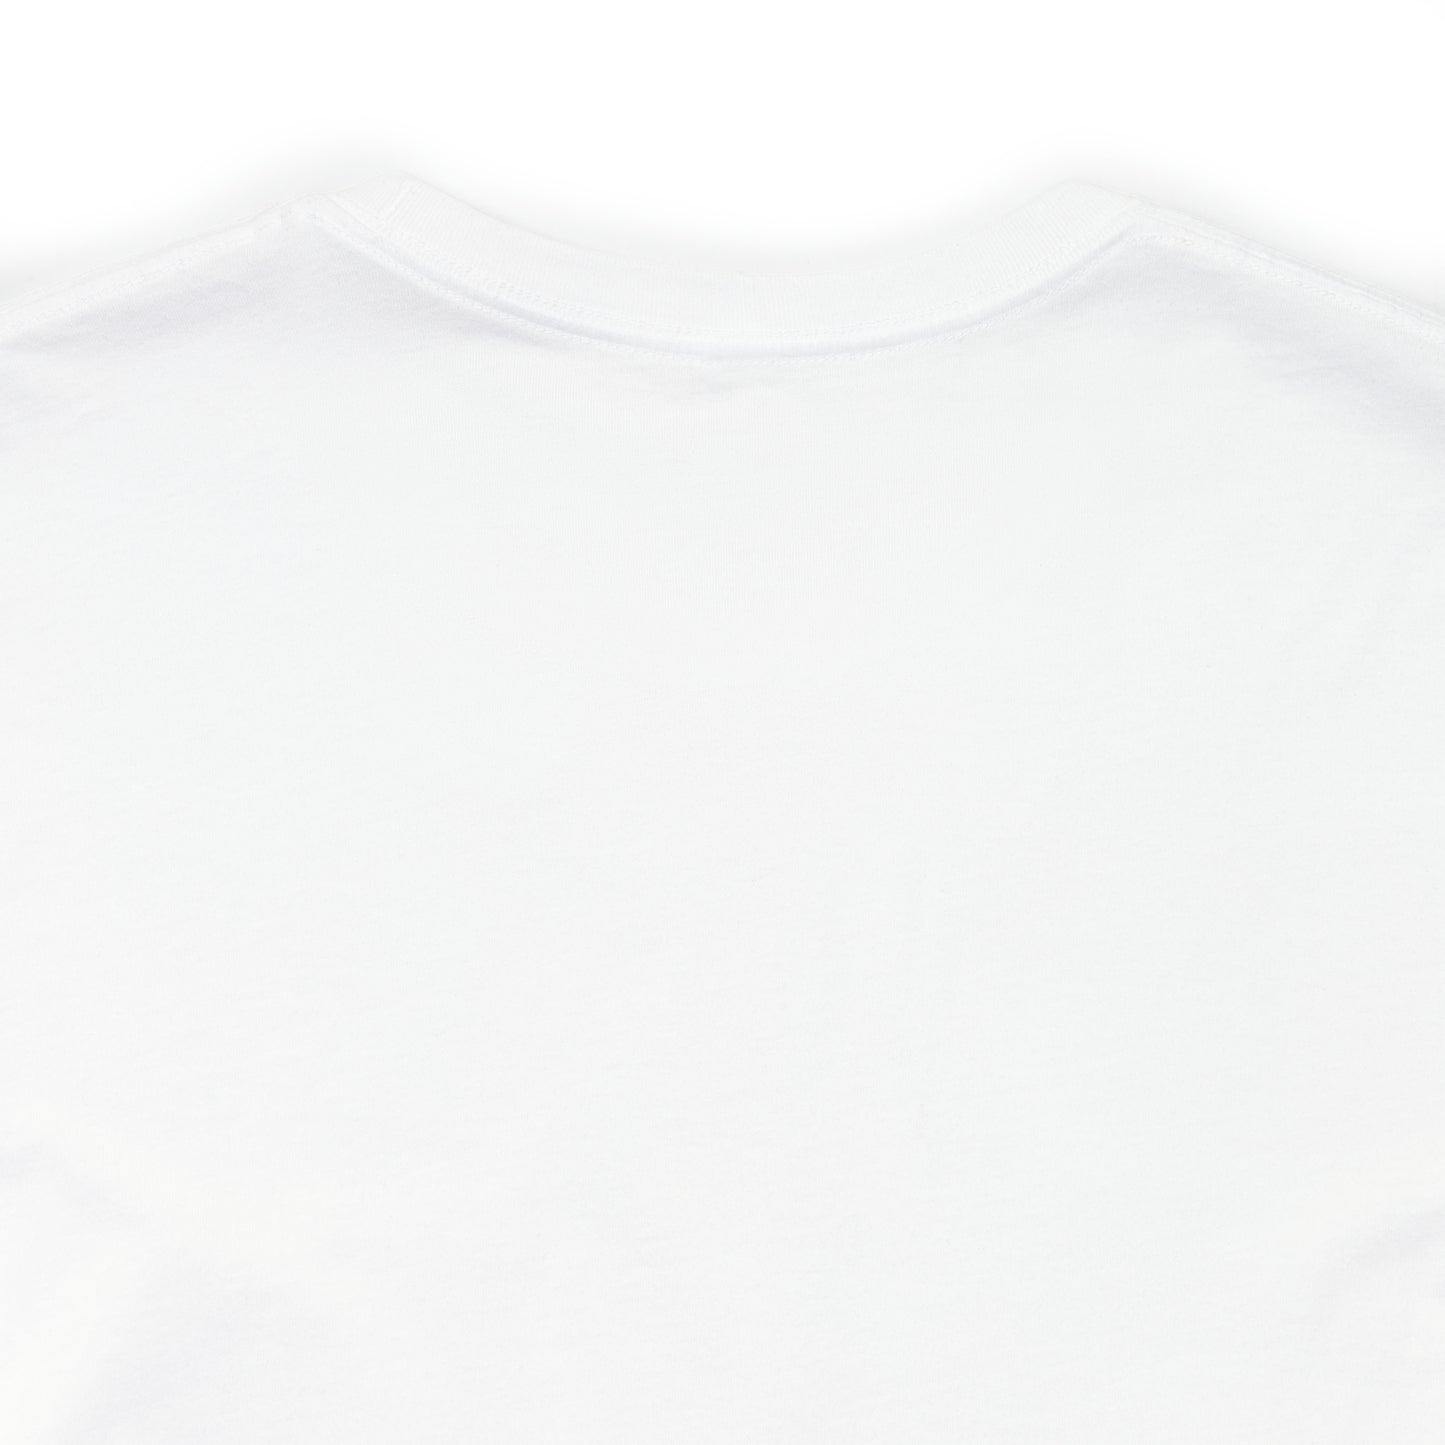 Sunset Sipper - Pop Art - White Premium T-shirt